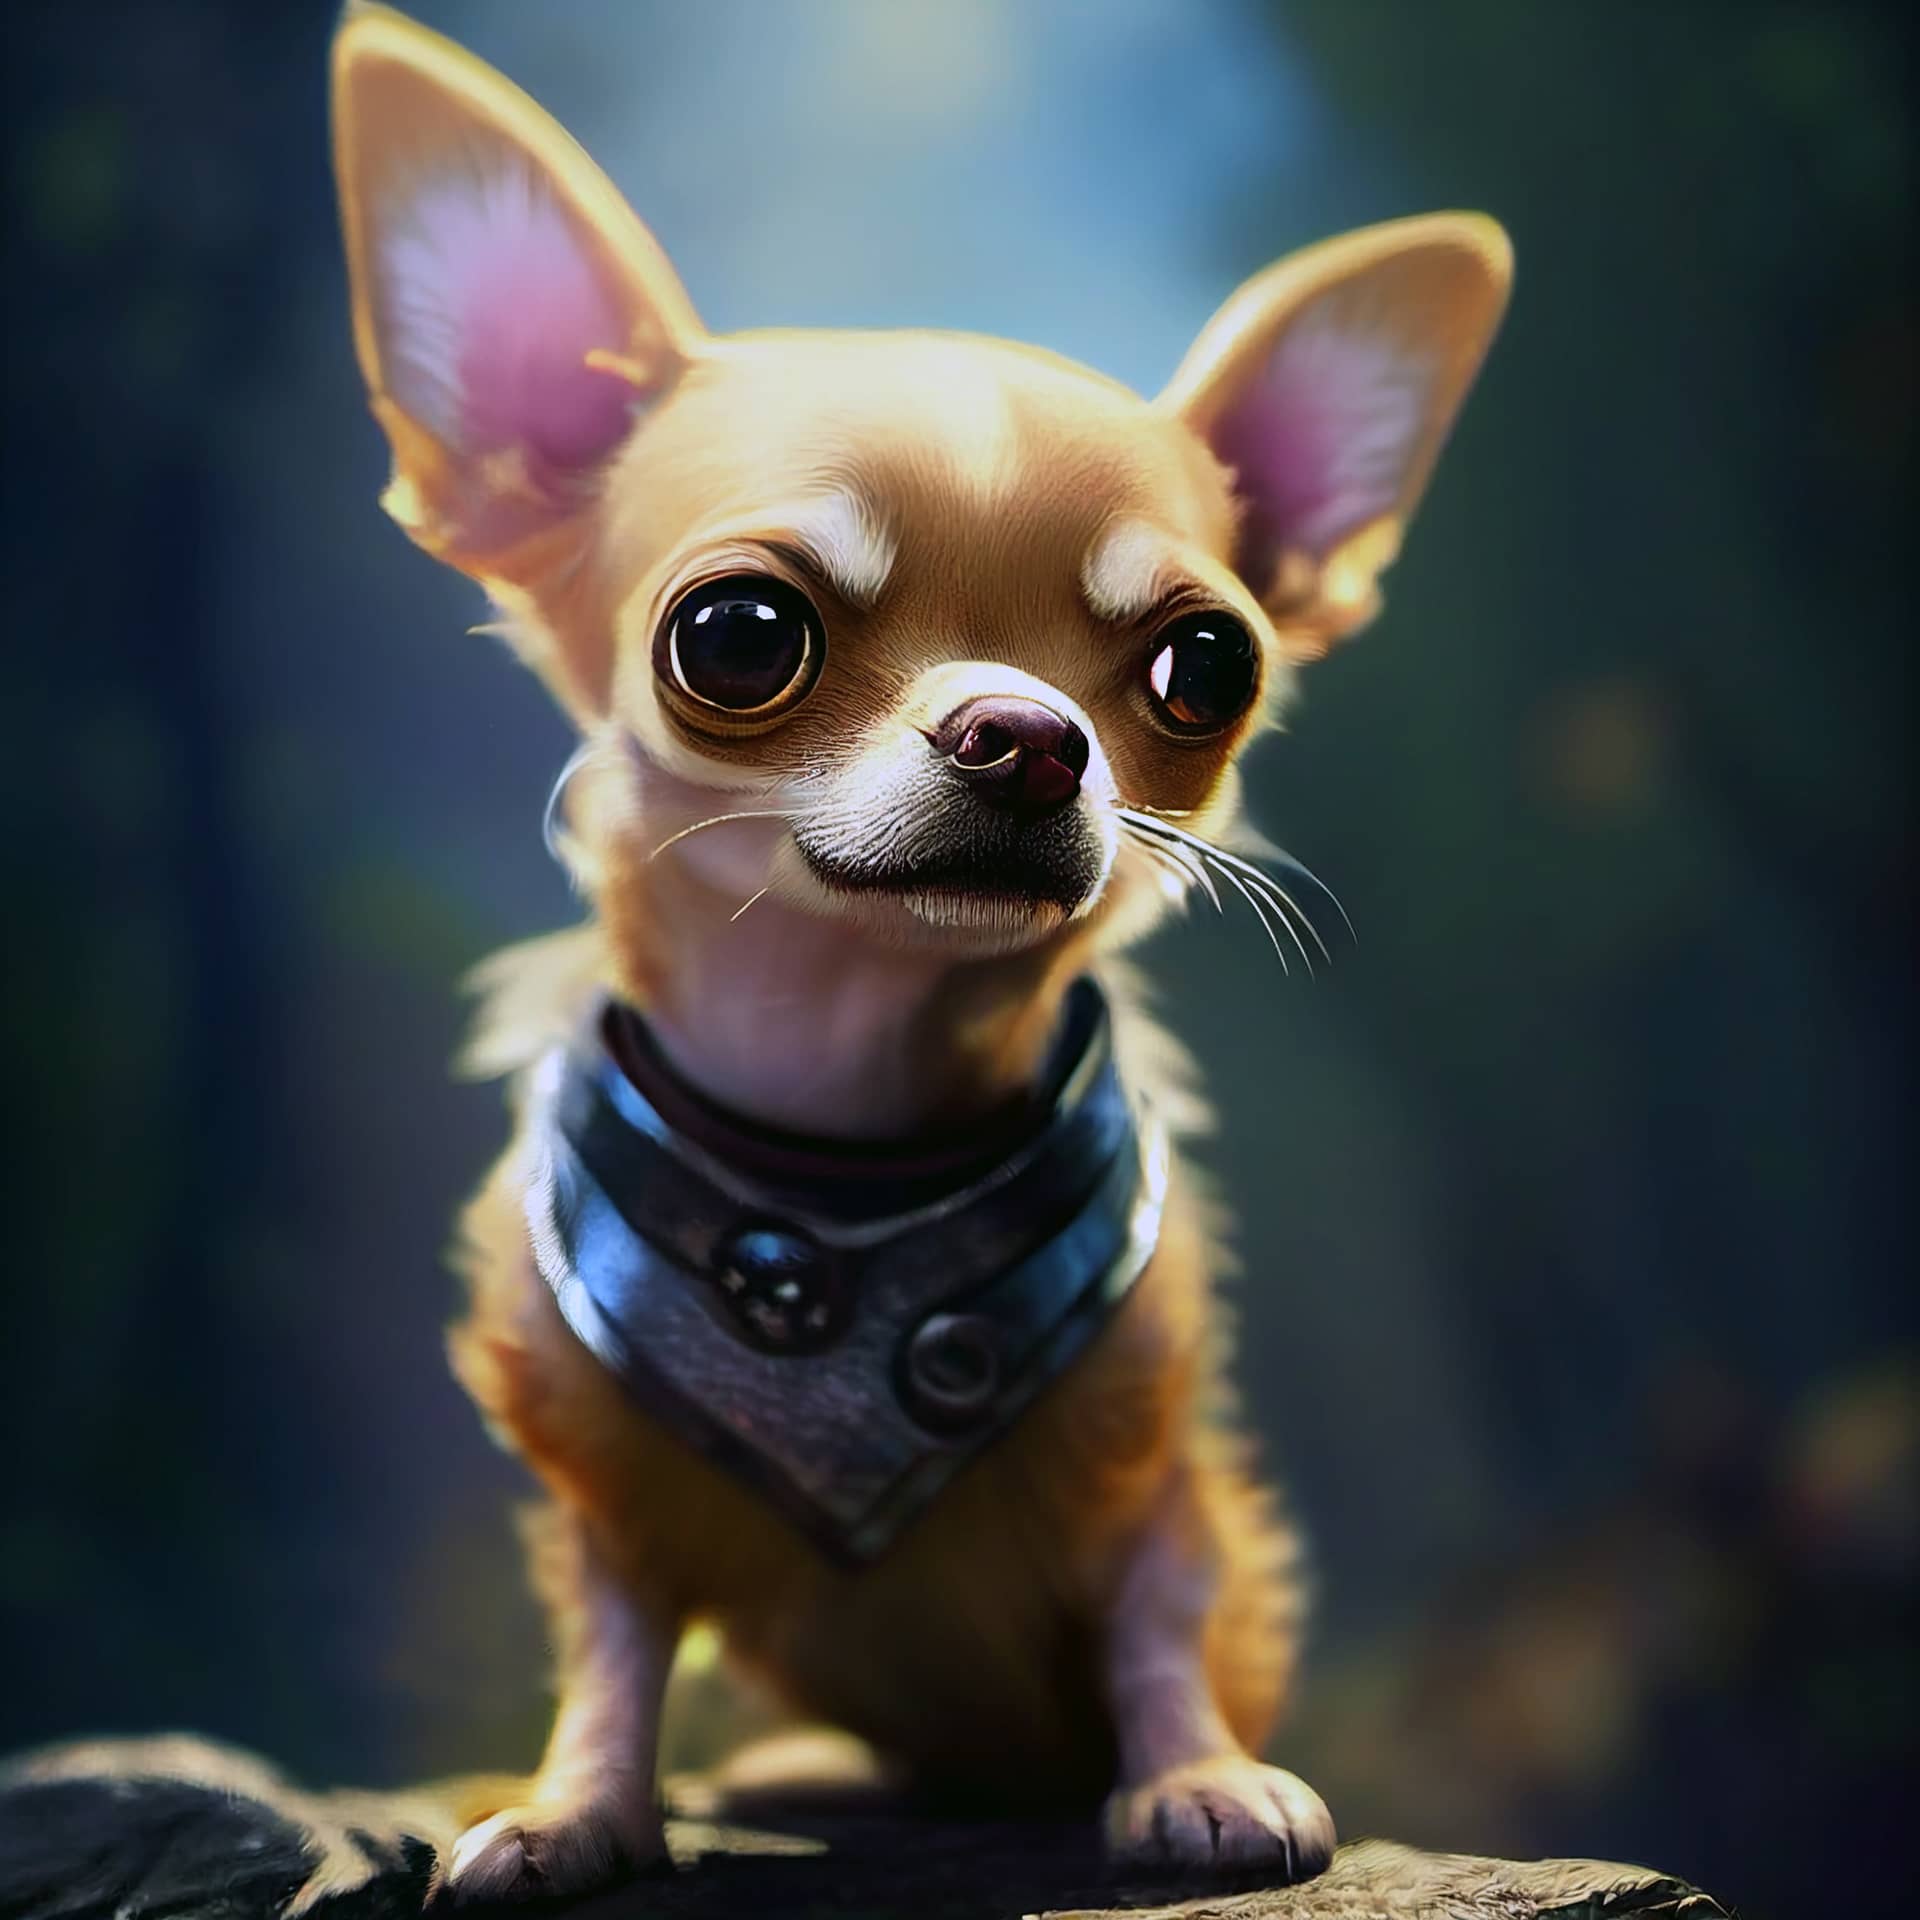 Adorable tiny chihuahua puppy as cartoon adventurer image